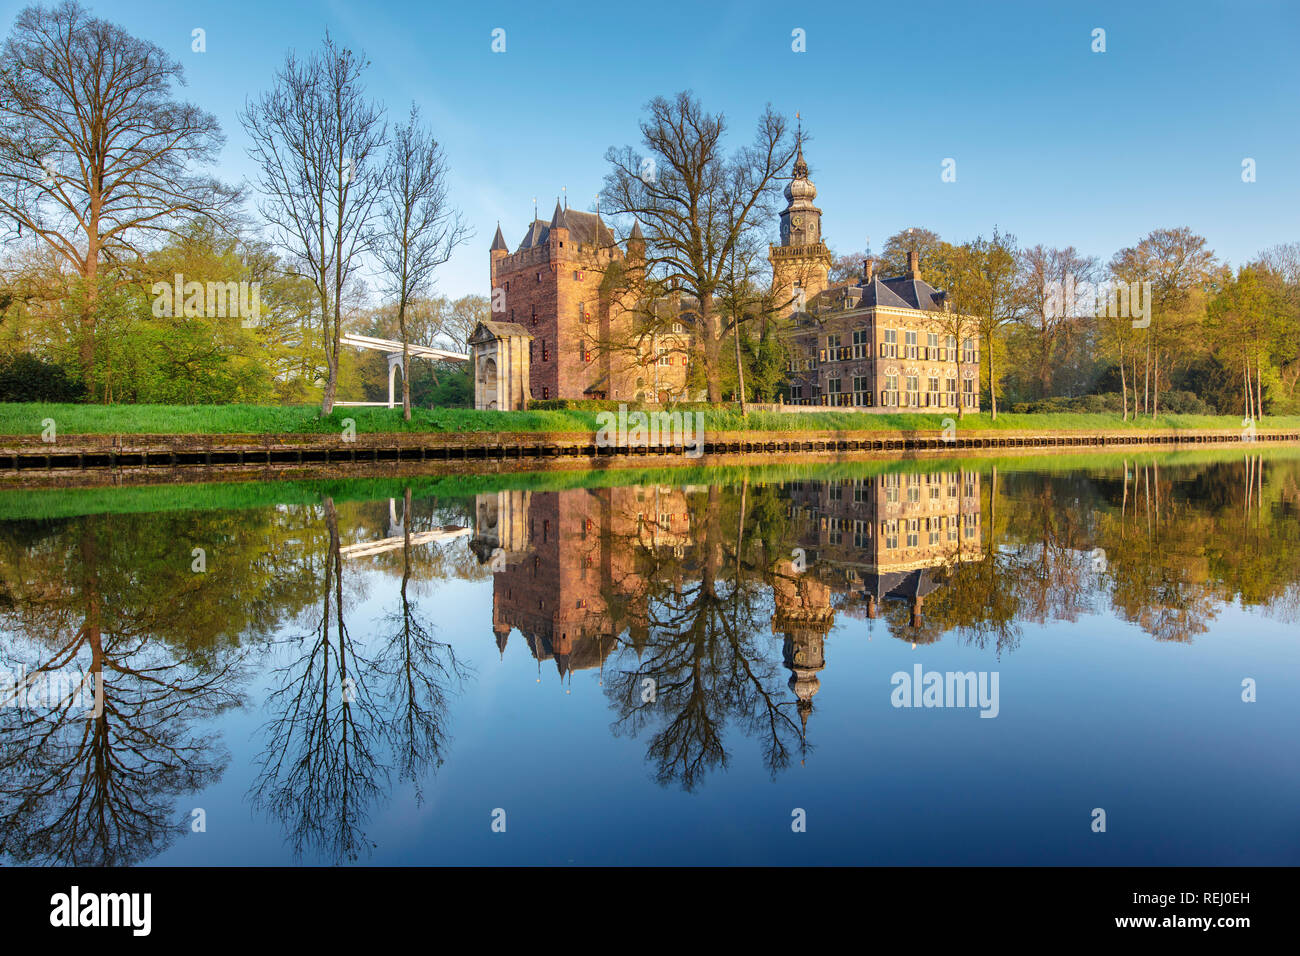 Niederlande, Breukelen, Schloss die Nyenrode Business Universiteit (ehemals Nijenrode) entlang der Vecht. Lage der Nyenrode Business University. Stockfoto